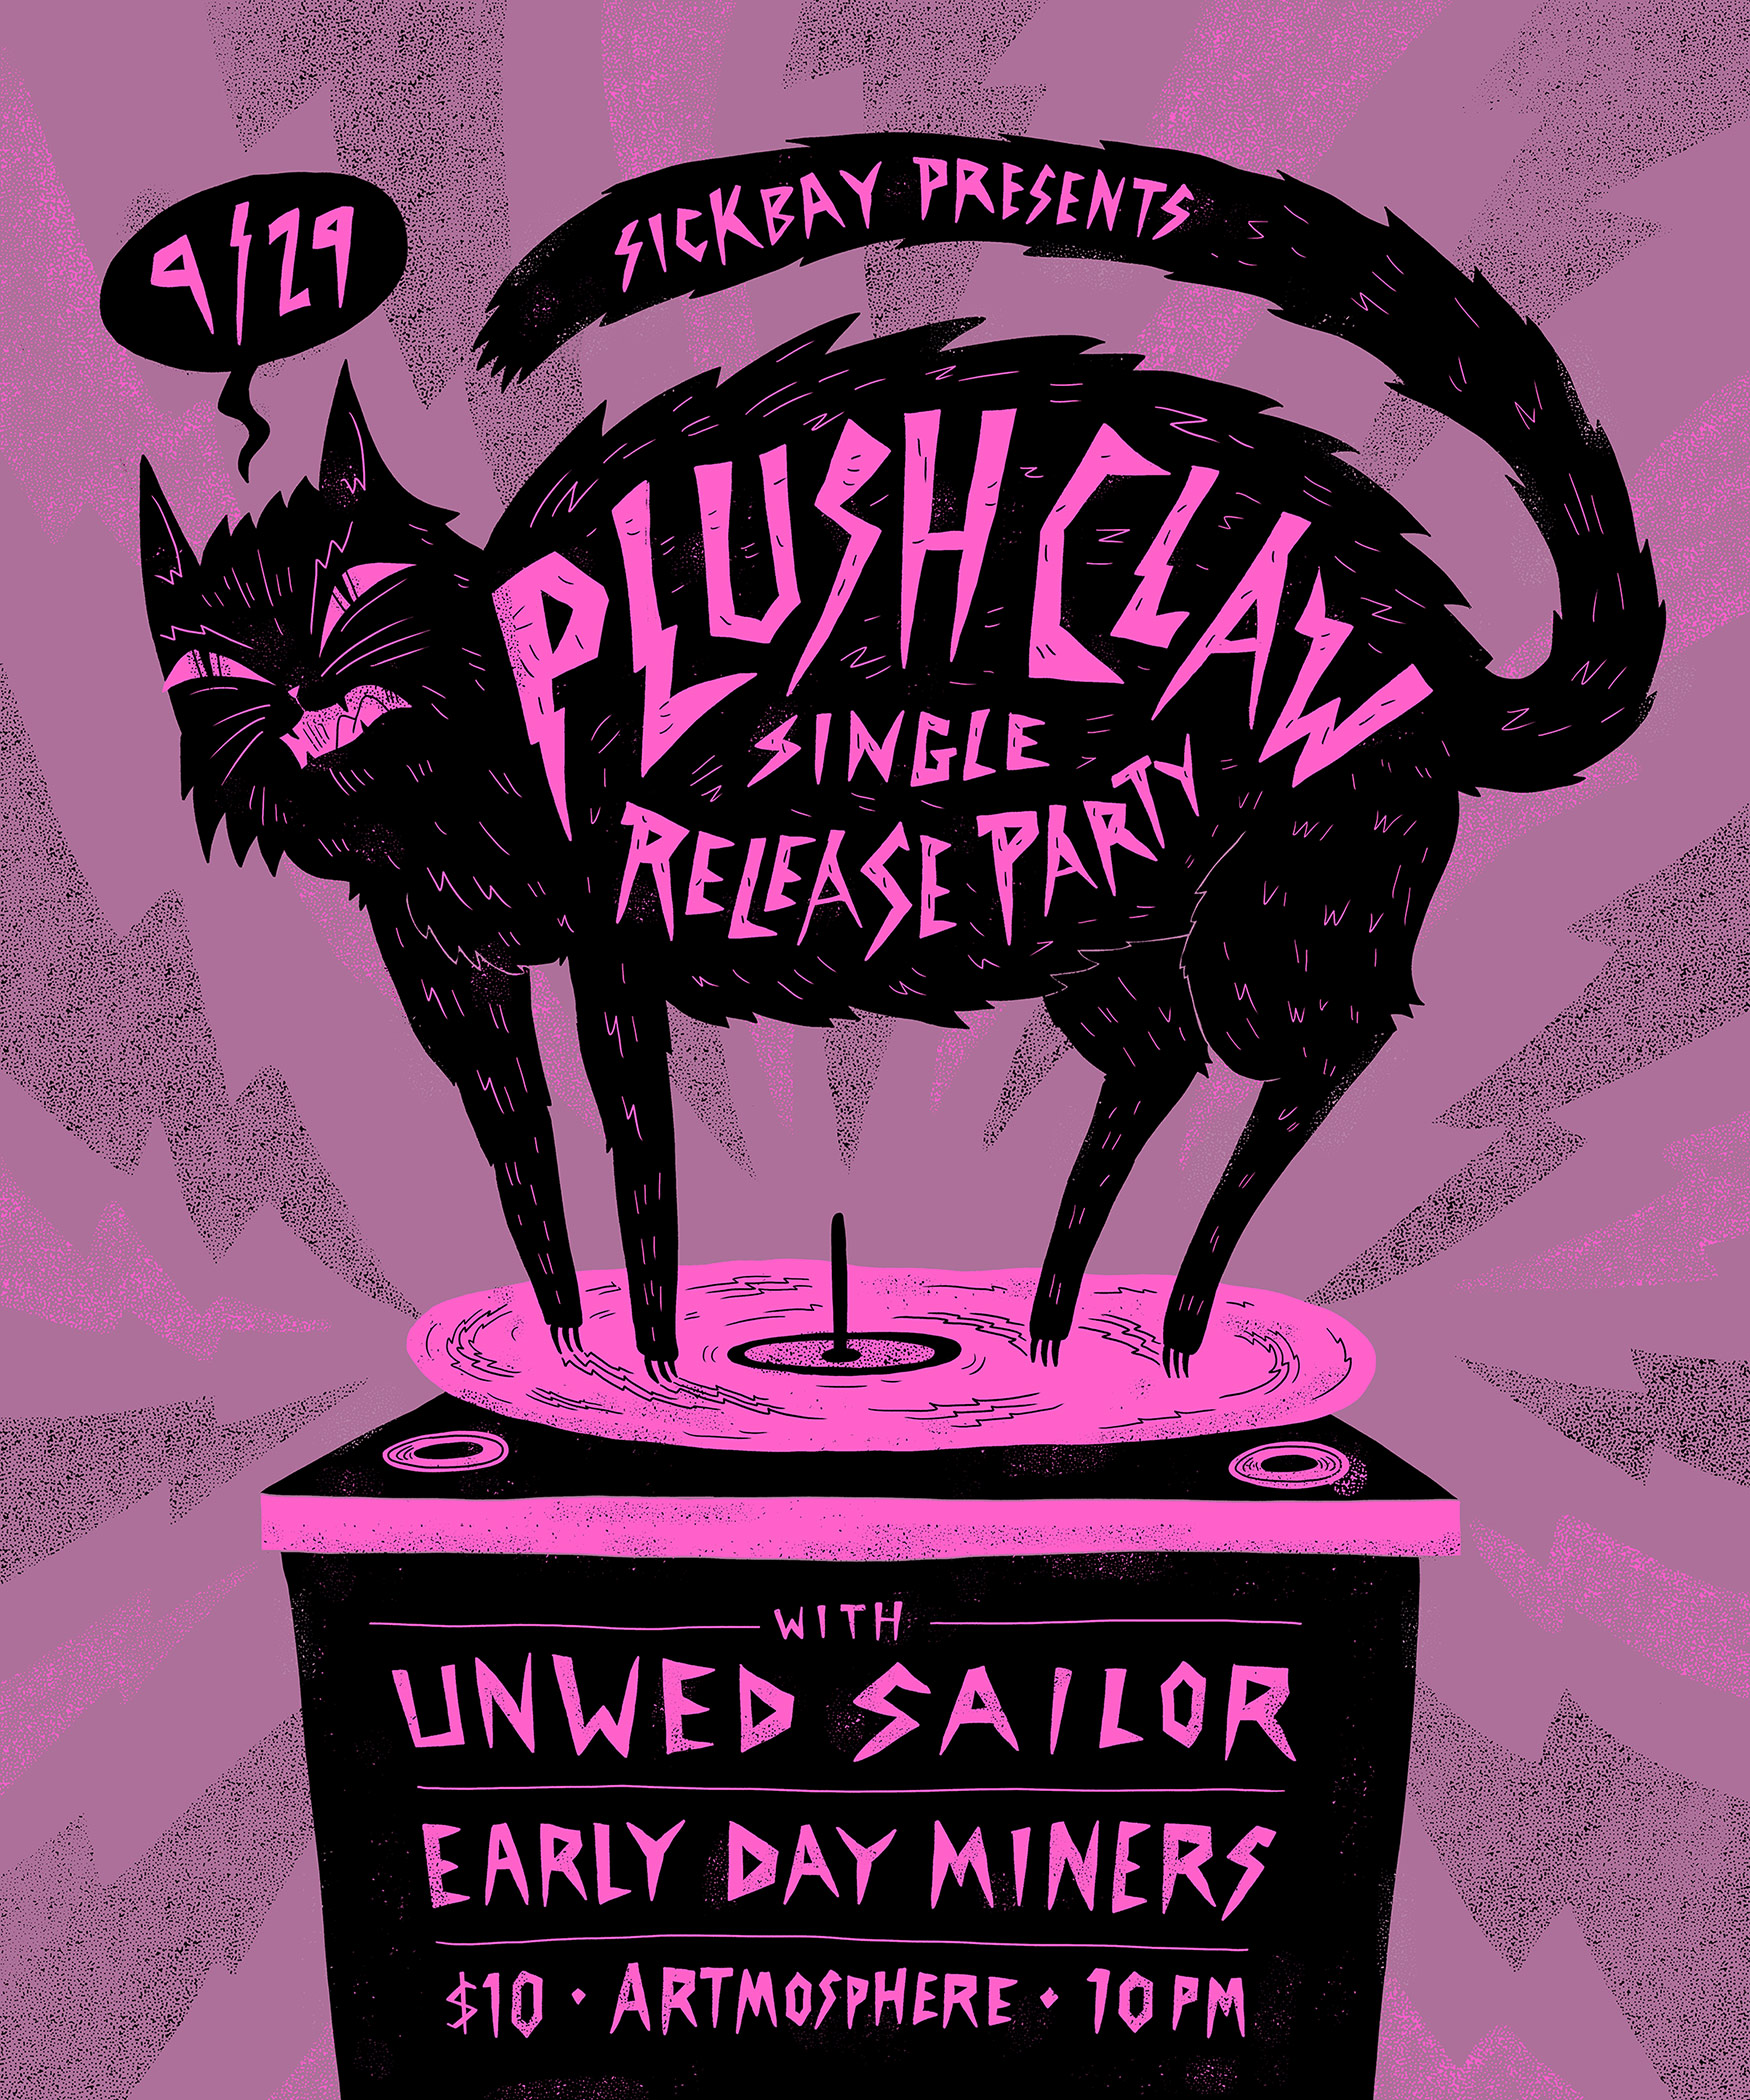 Plush Claw Single Release